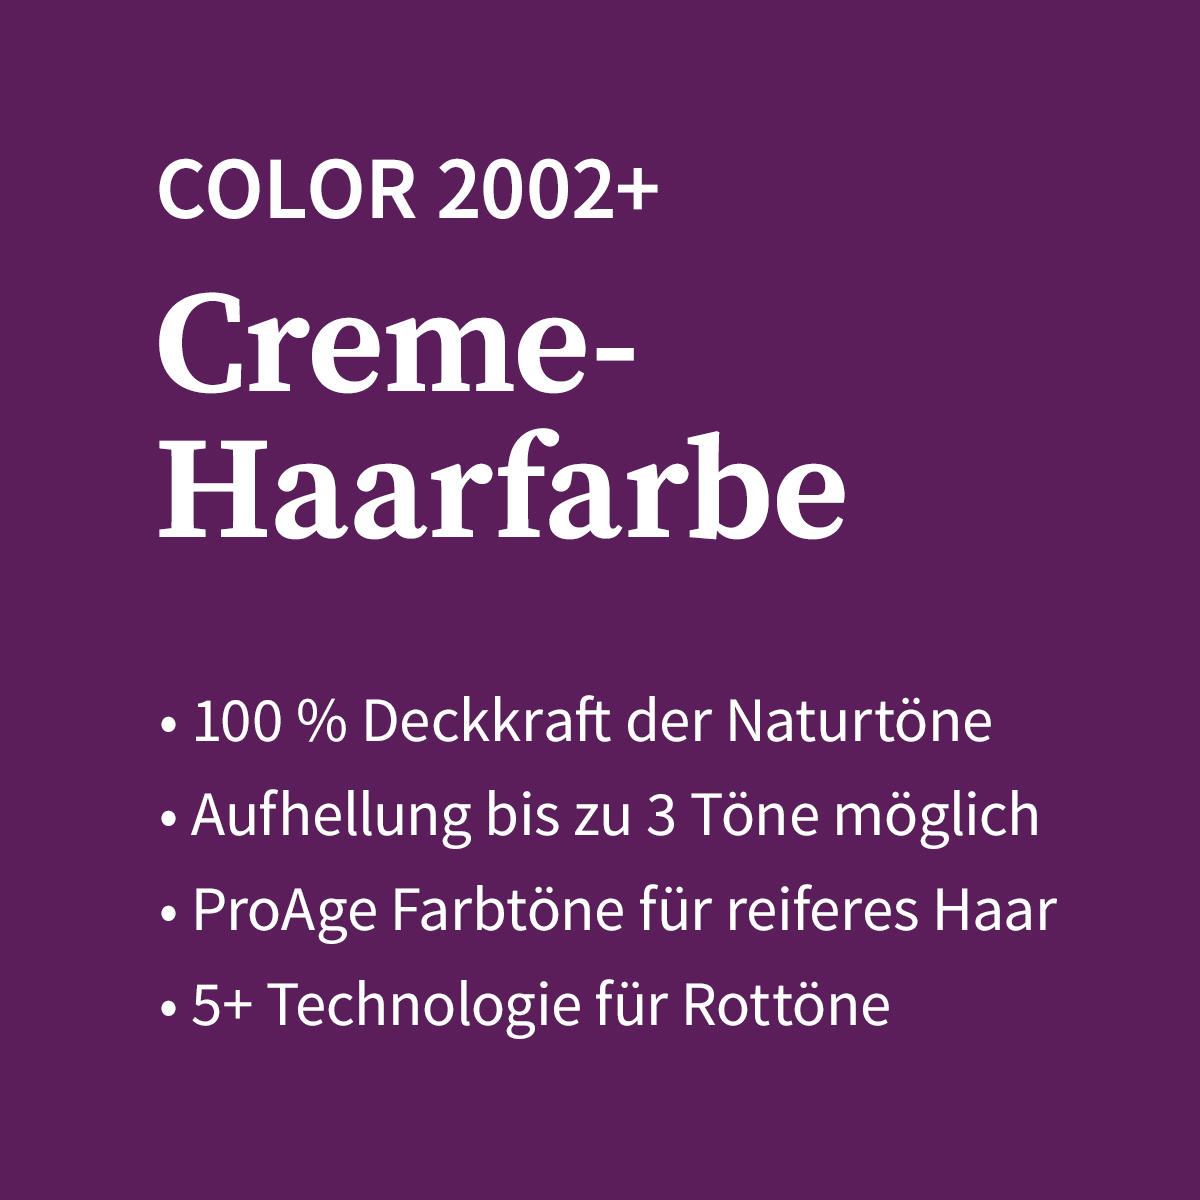 Basler Color 2002+ Cremehaarfarbe M3 gold-mix, Tube 60 ml - 4